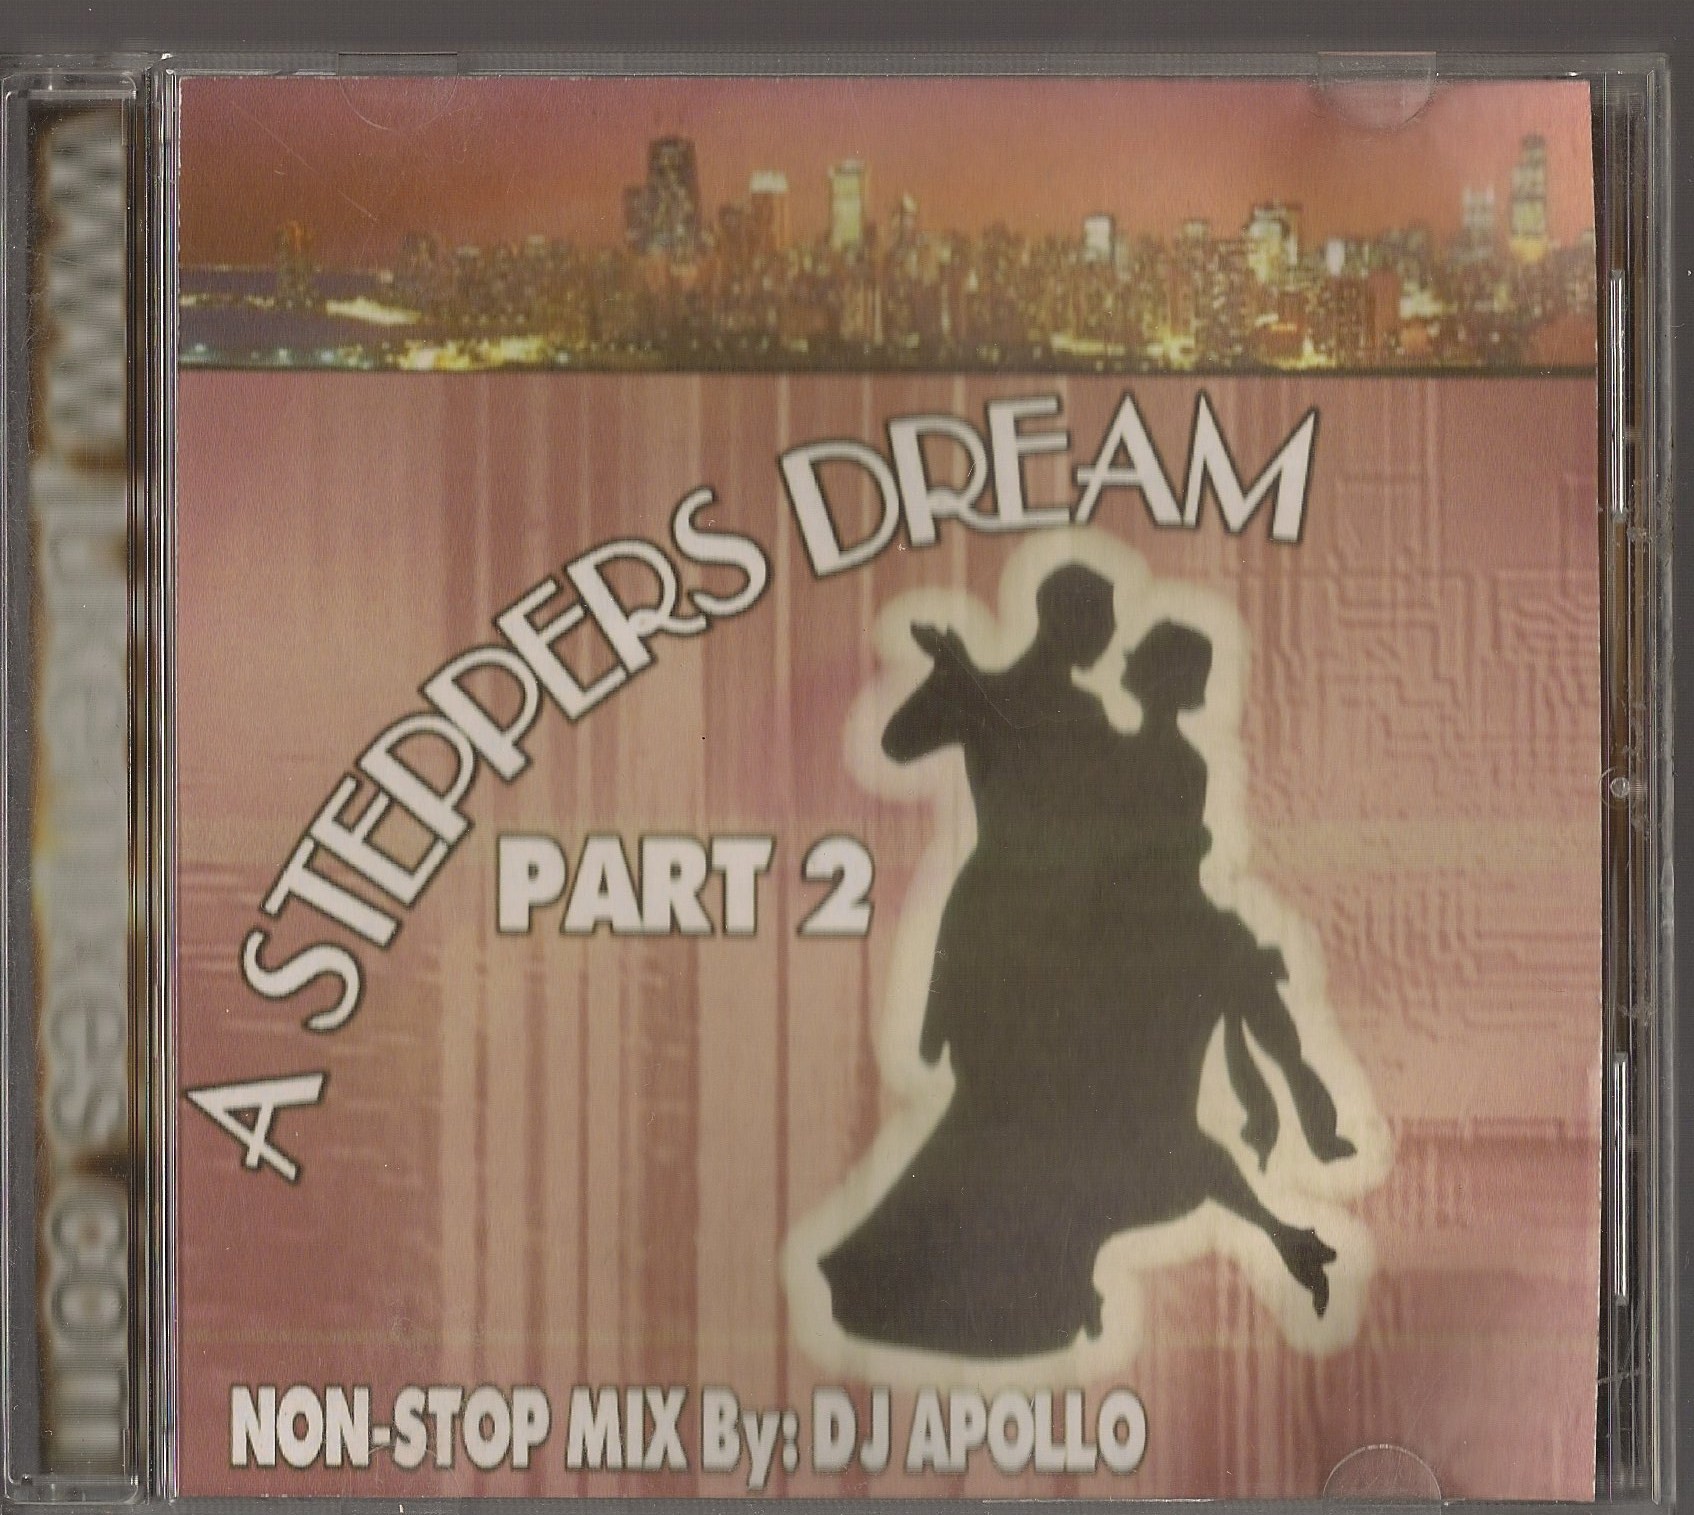 DJ APOLLO - A STEPPERS DREAM PART 2